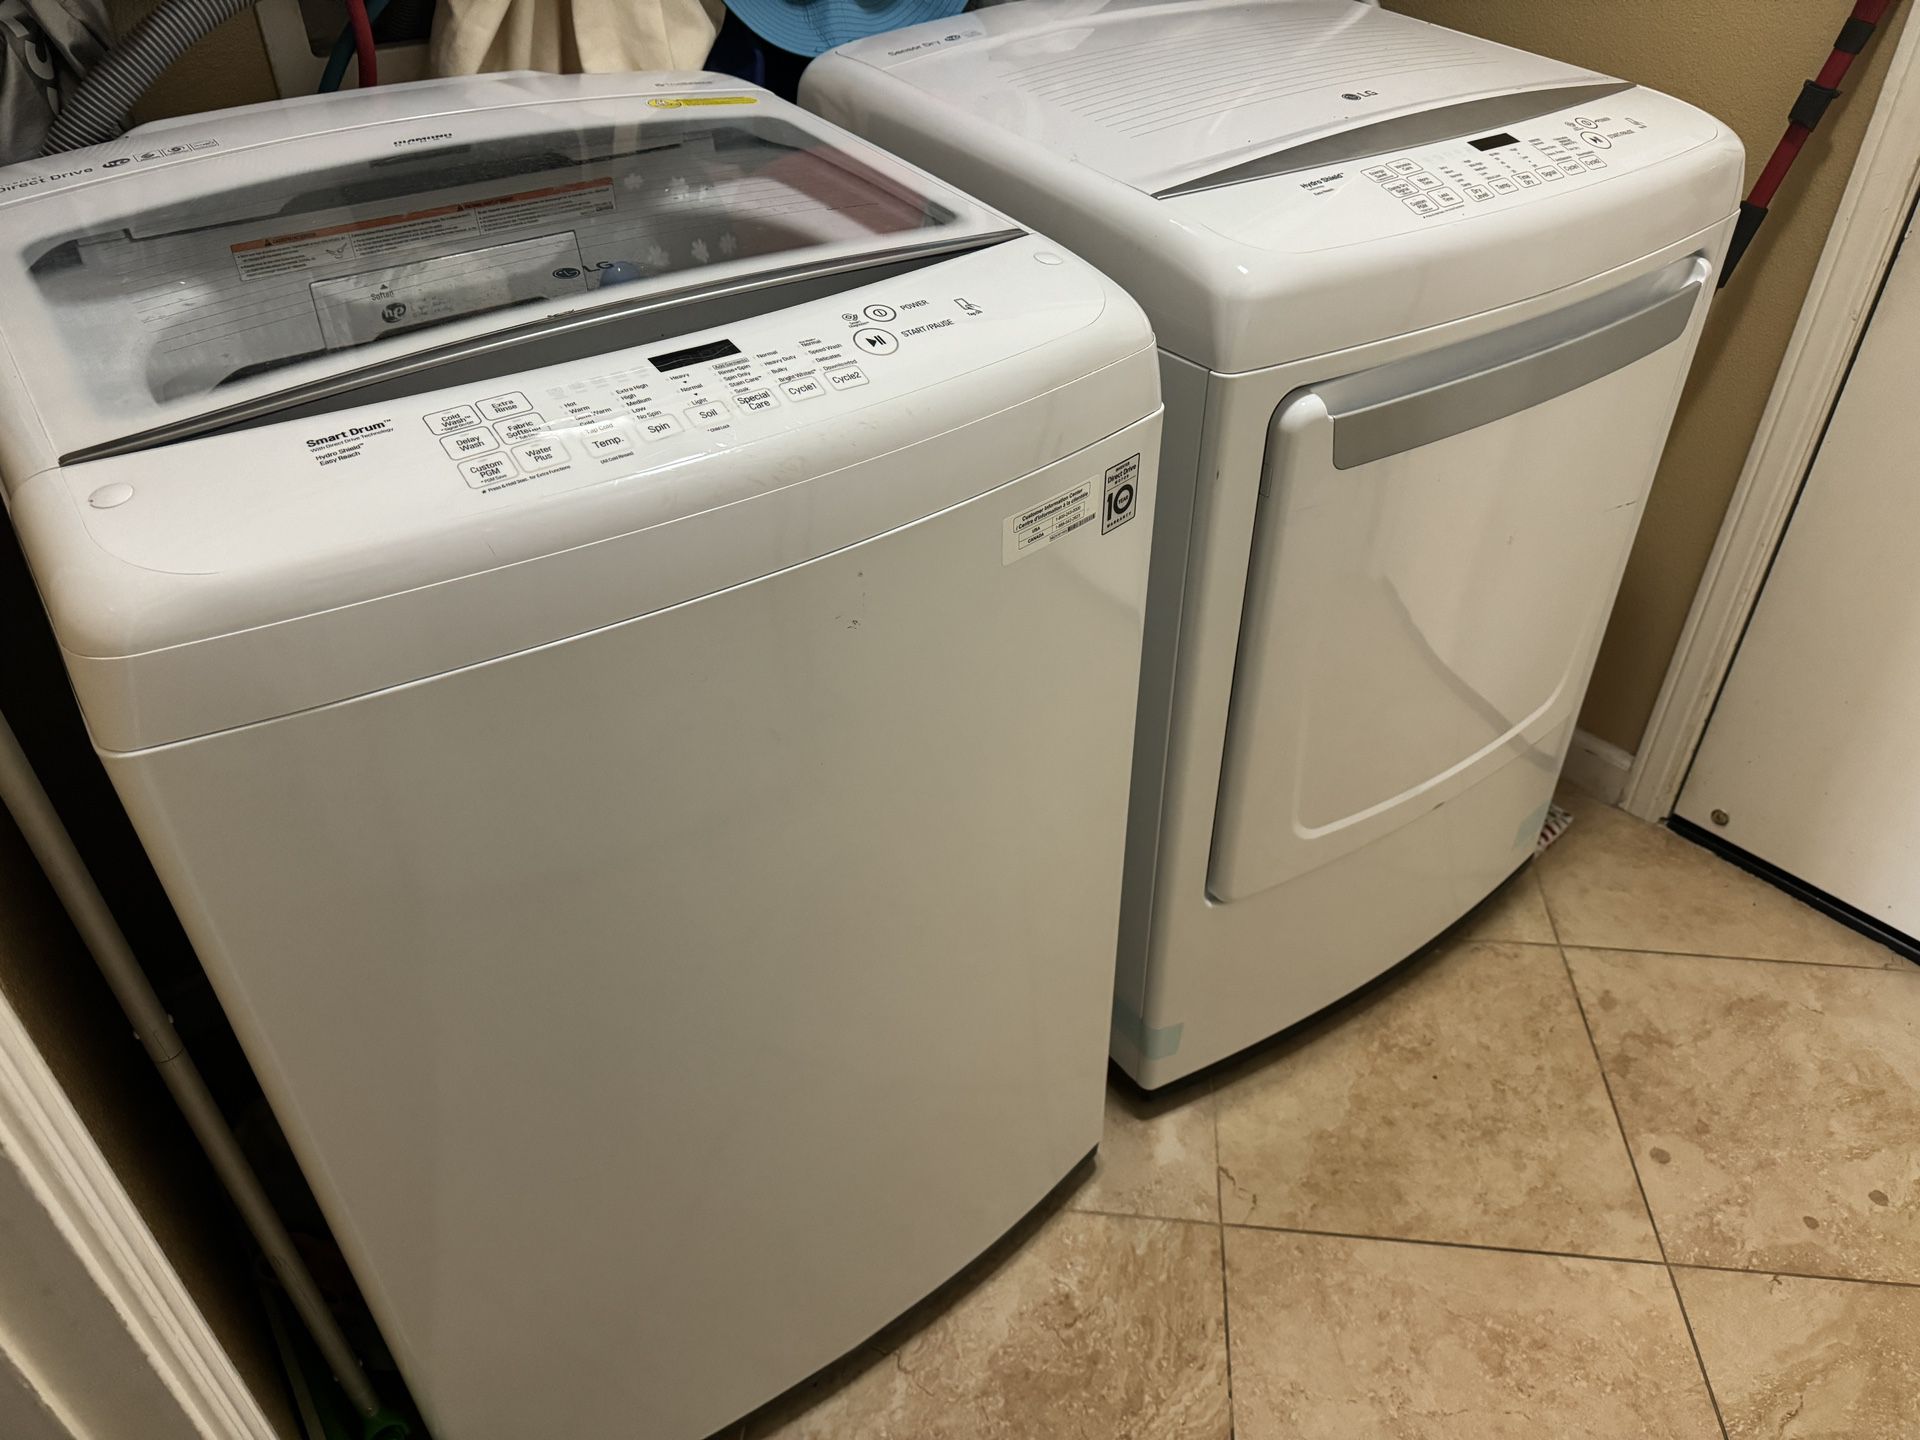 LG Washer & Dryer